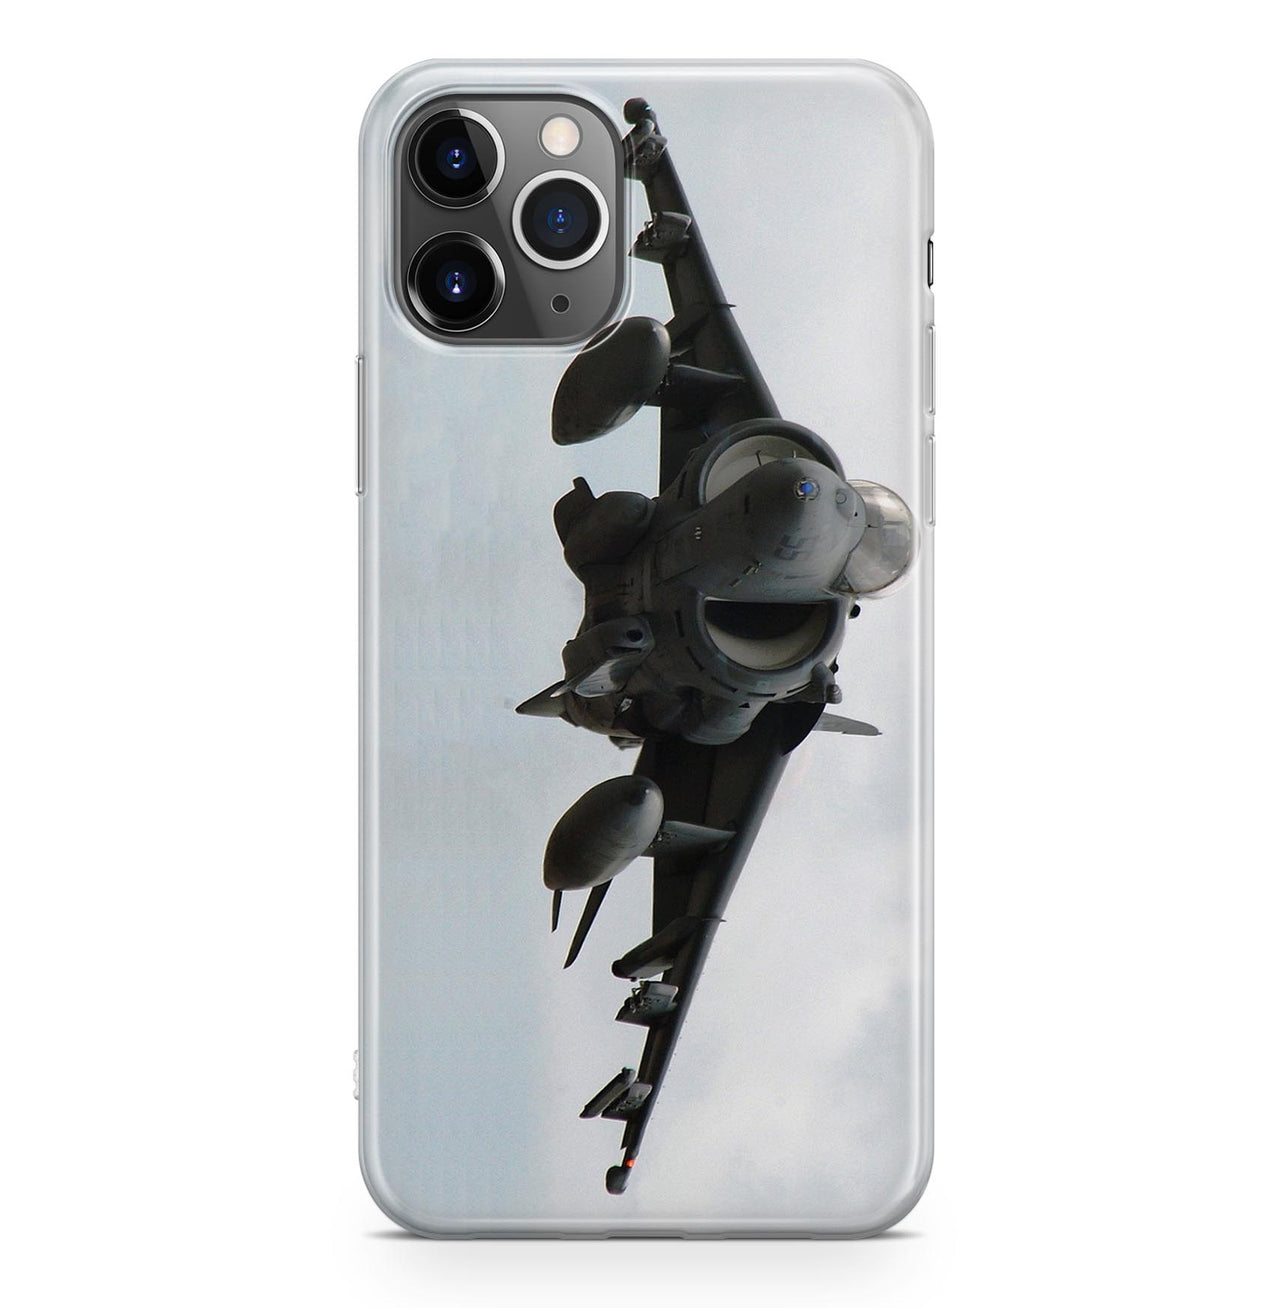 Departing Super Fighter Jet Designed iPhone Cases